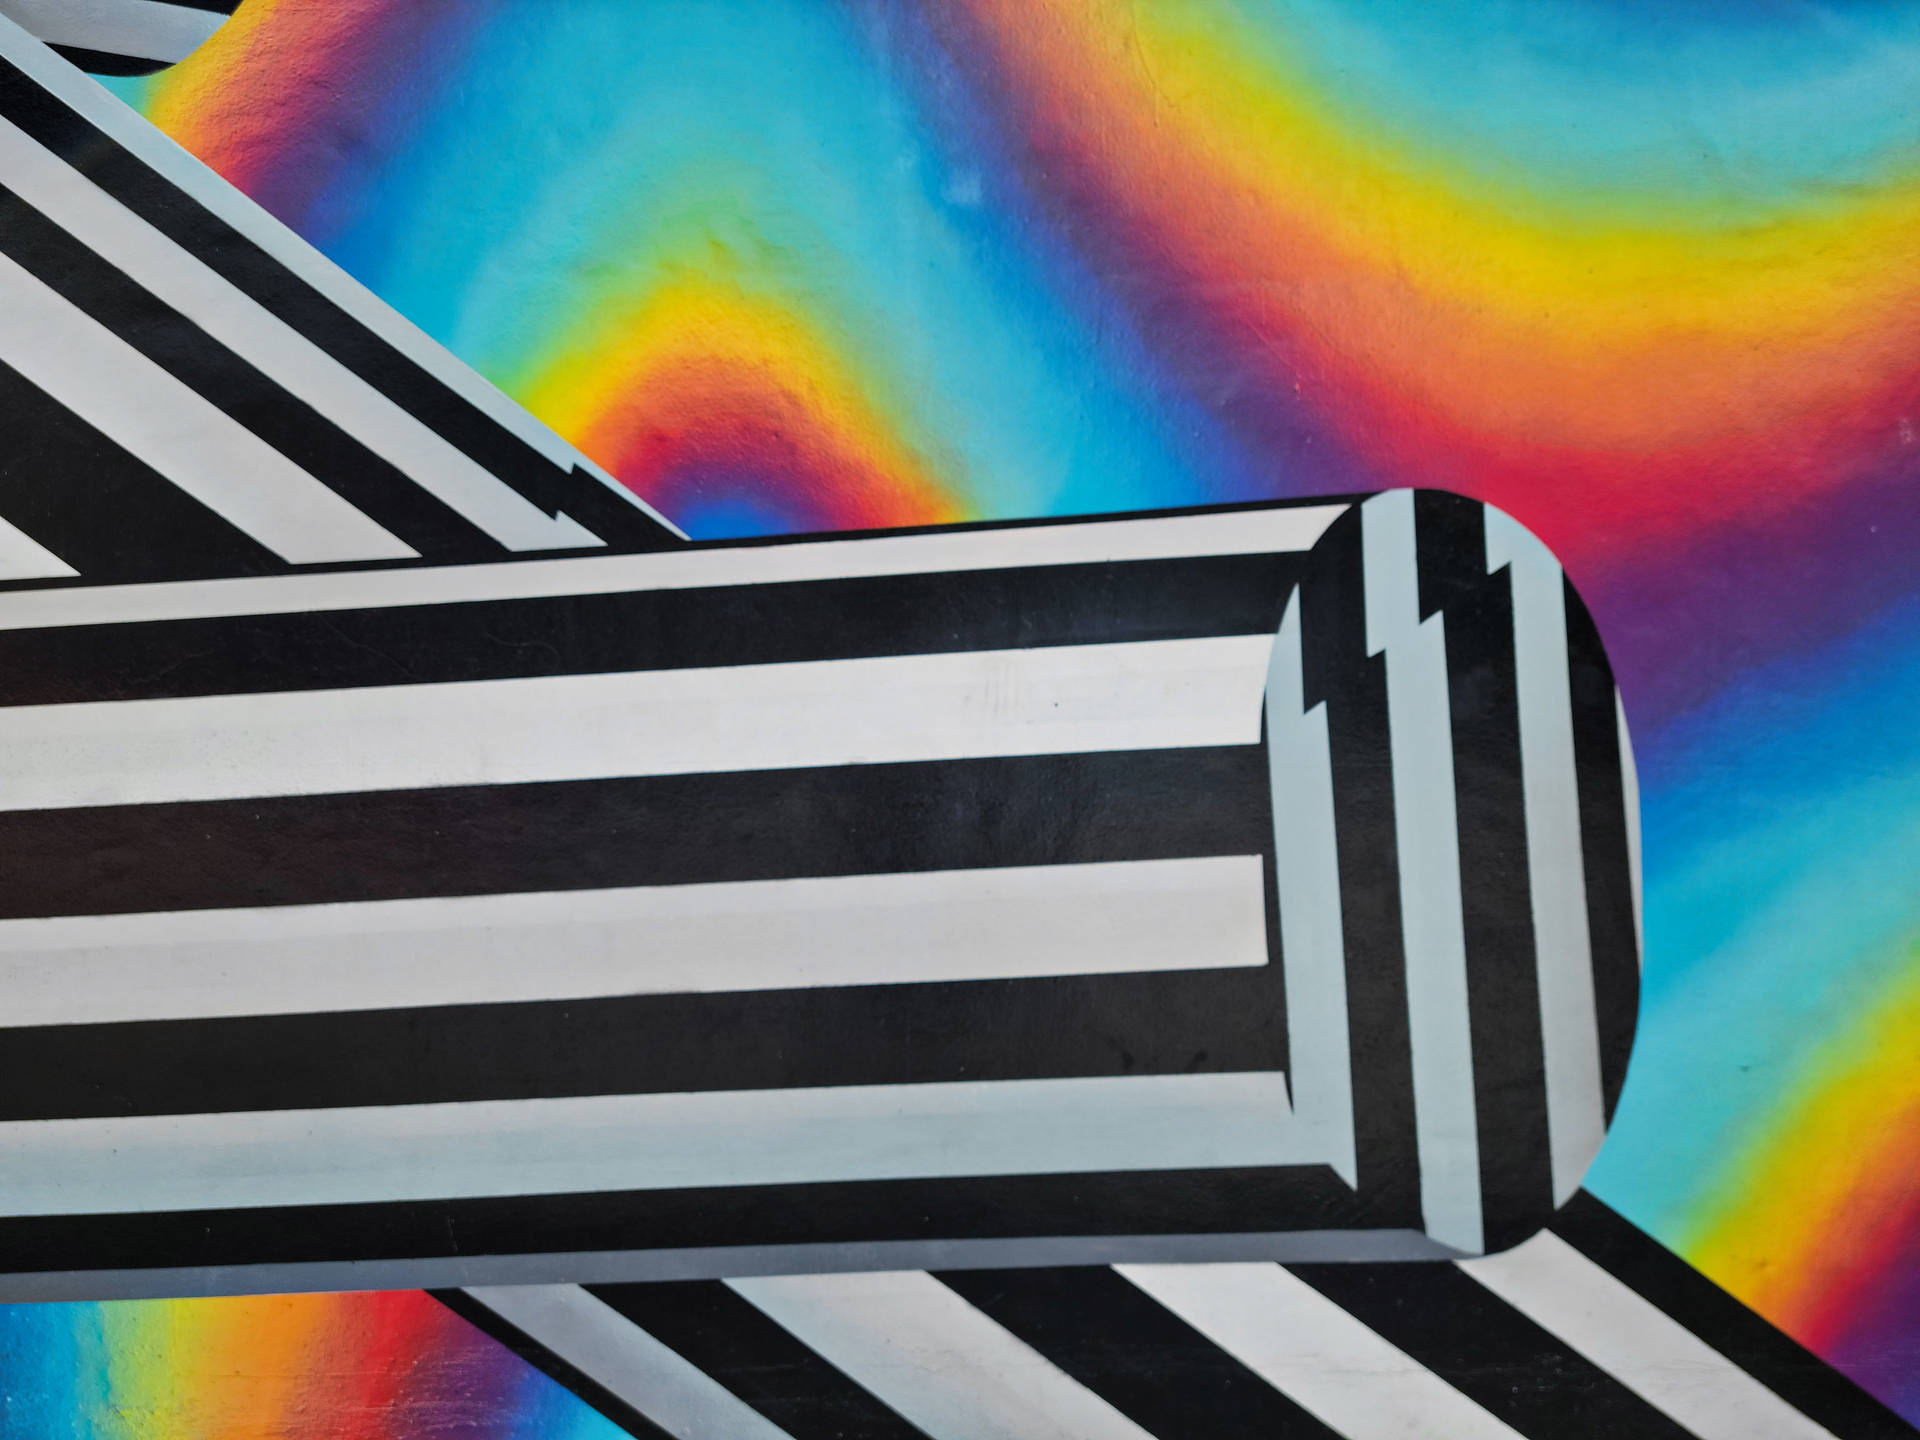 Caption: Artistic Rainbow Stripes Design Wallpaper